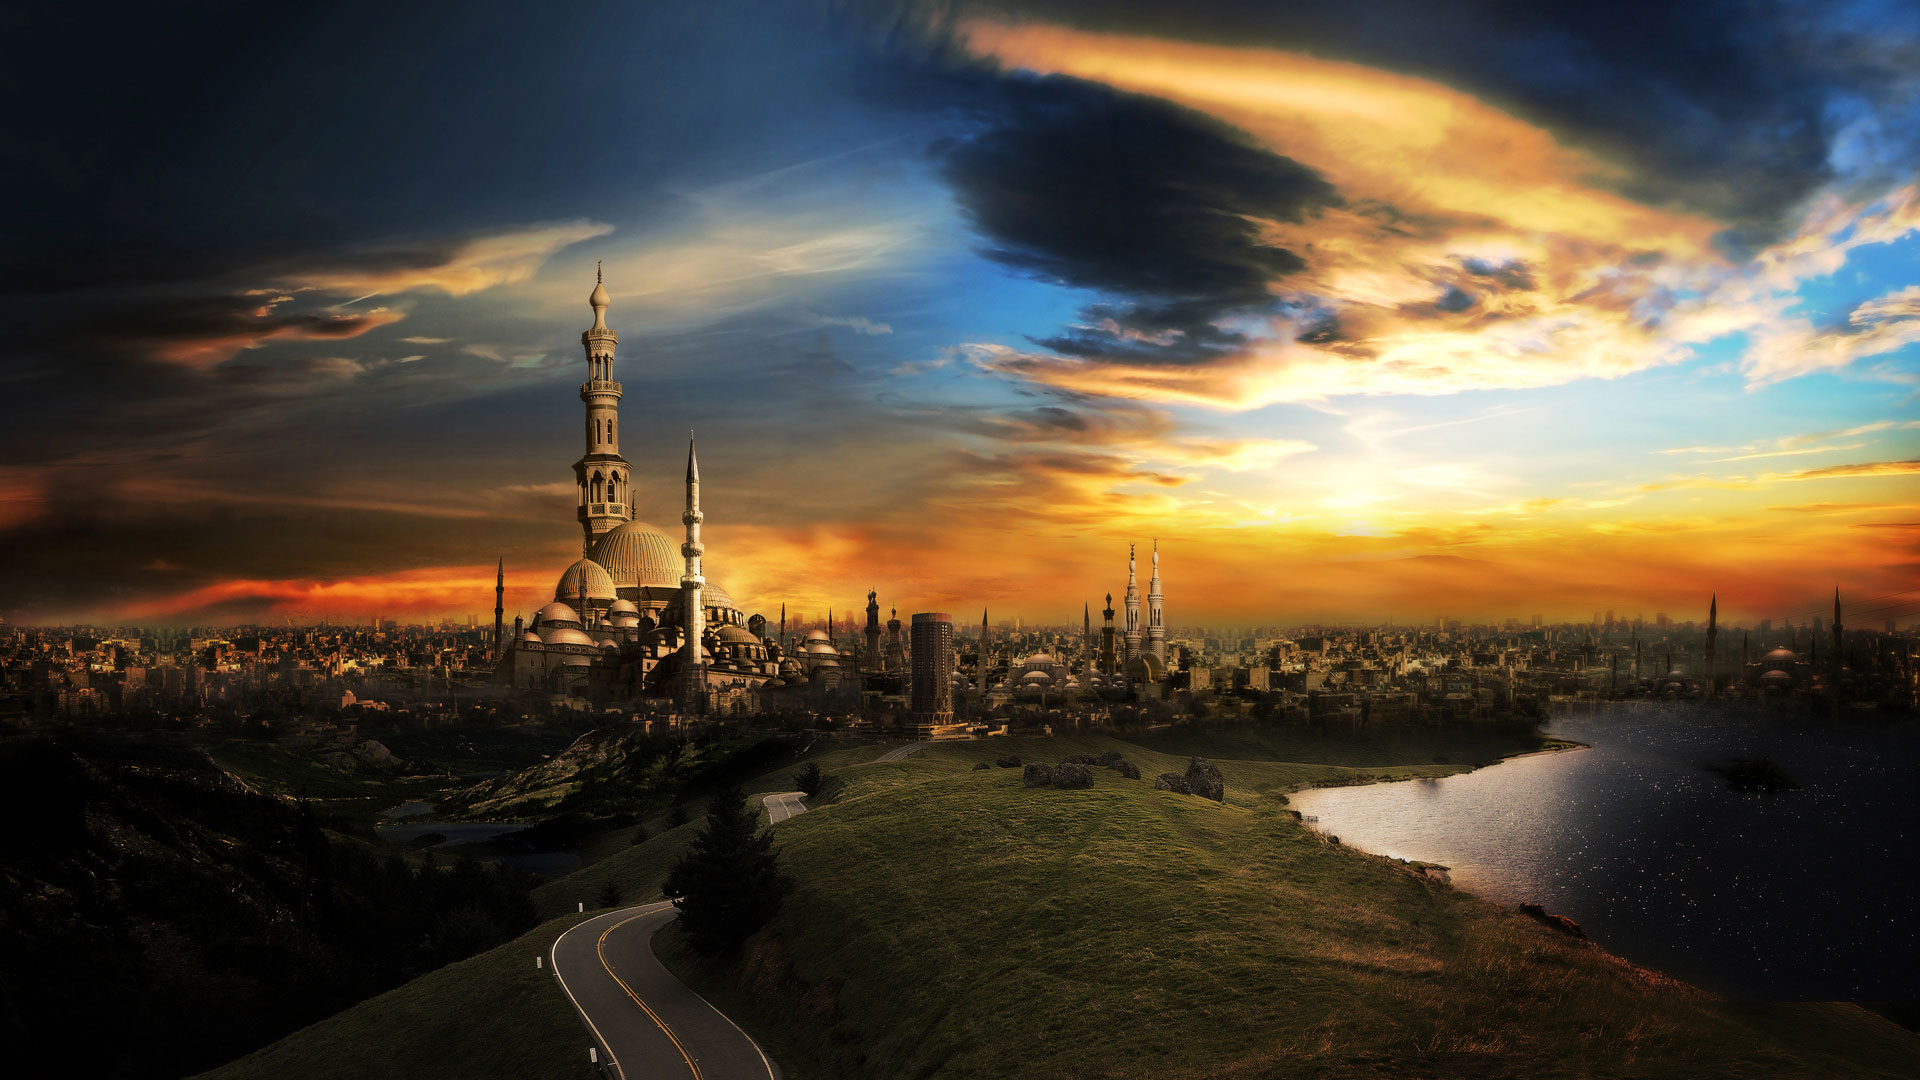 islam, road, landscape, lake, cgi, city, man made, cairo, sky, cloud, sunset